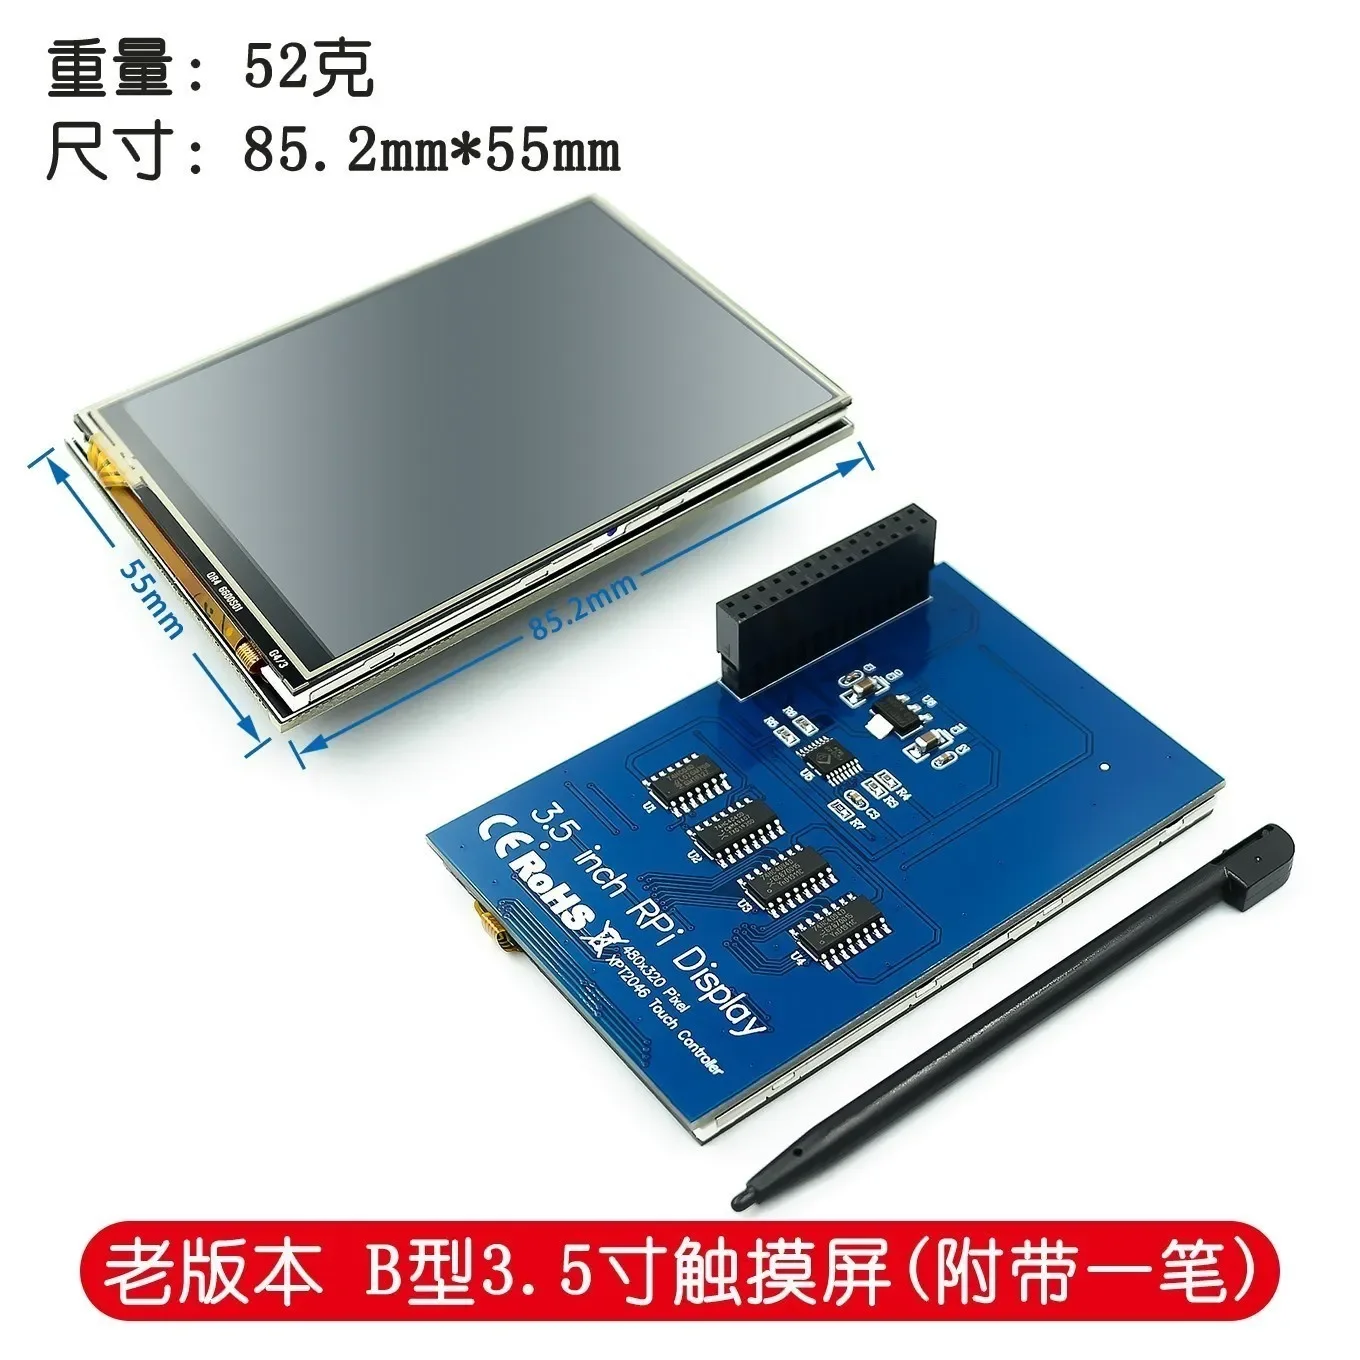 3.5 inch LCD HDMI USB Touch Screen Real HD 1920x1080 LCD Display Py for Raspberri 3 Model B / Orange Pi (Play Game Video)MPI3508